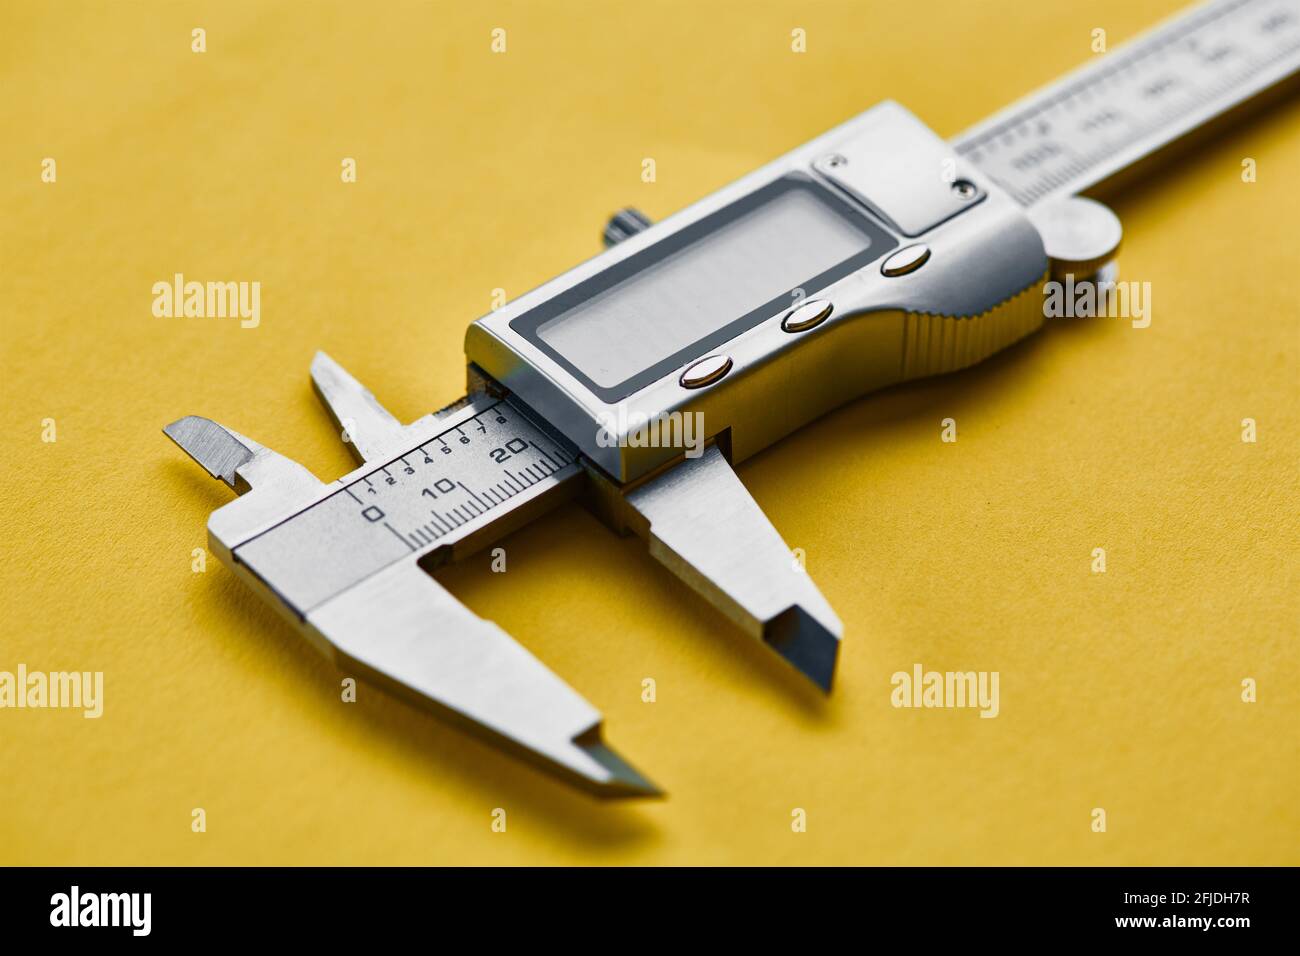 Electronic vernier caliper, yellow background Stock Photo